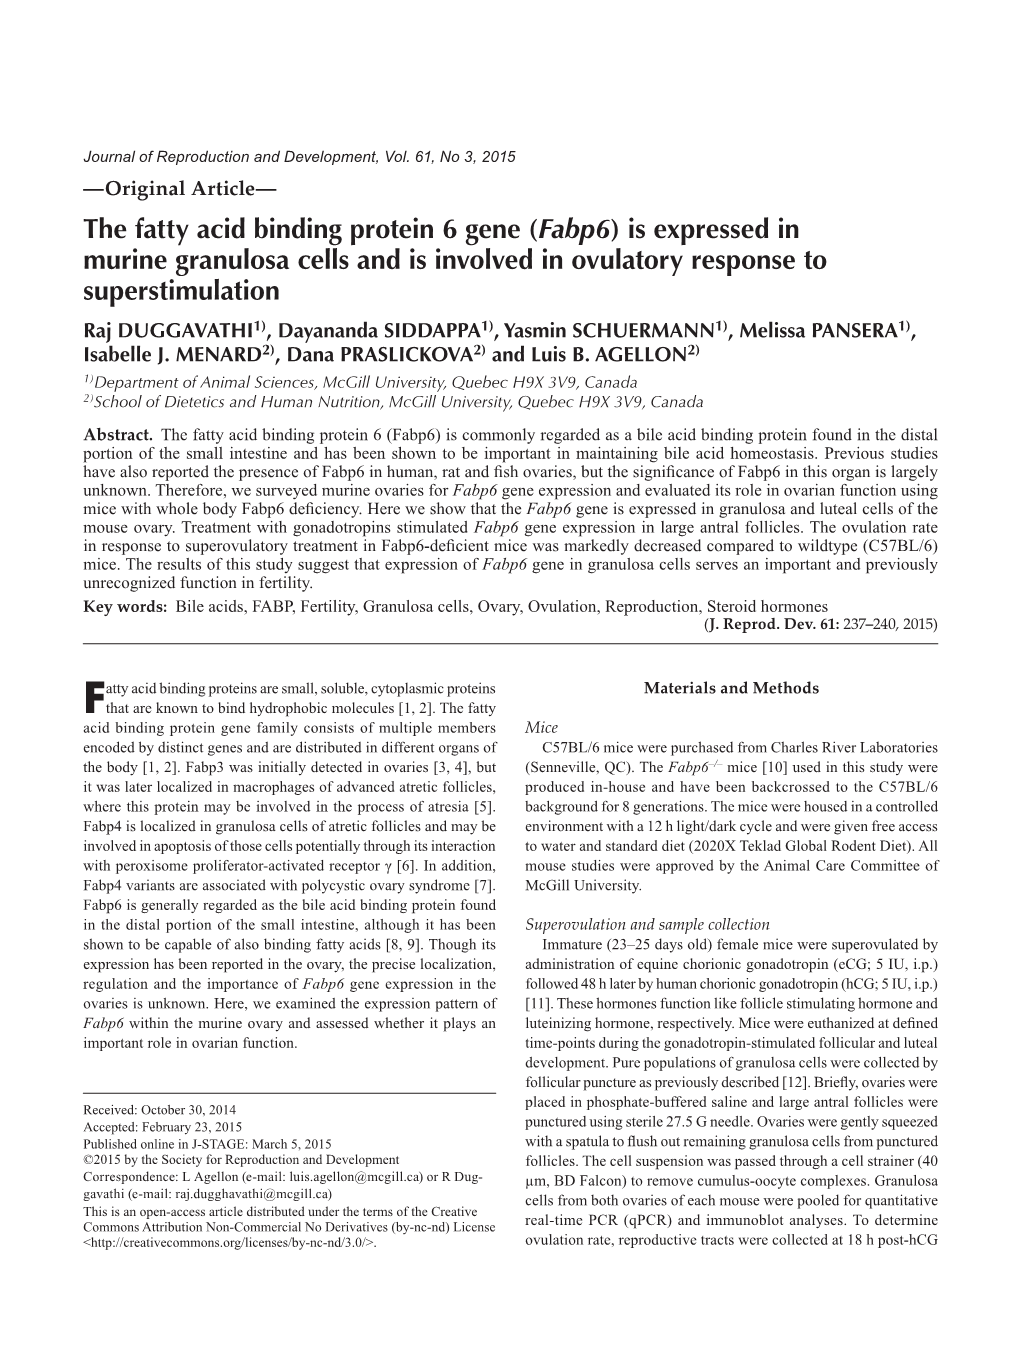 The Fatty Acid Binding Protein 6 Gene (Fabp6)